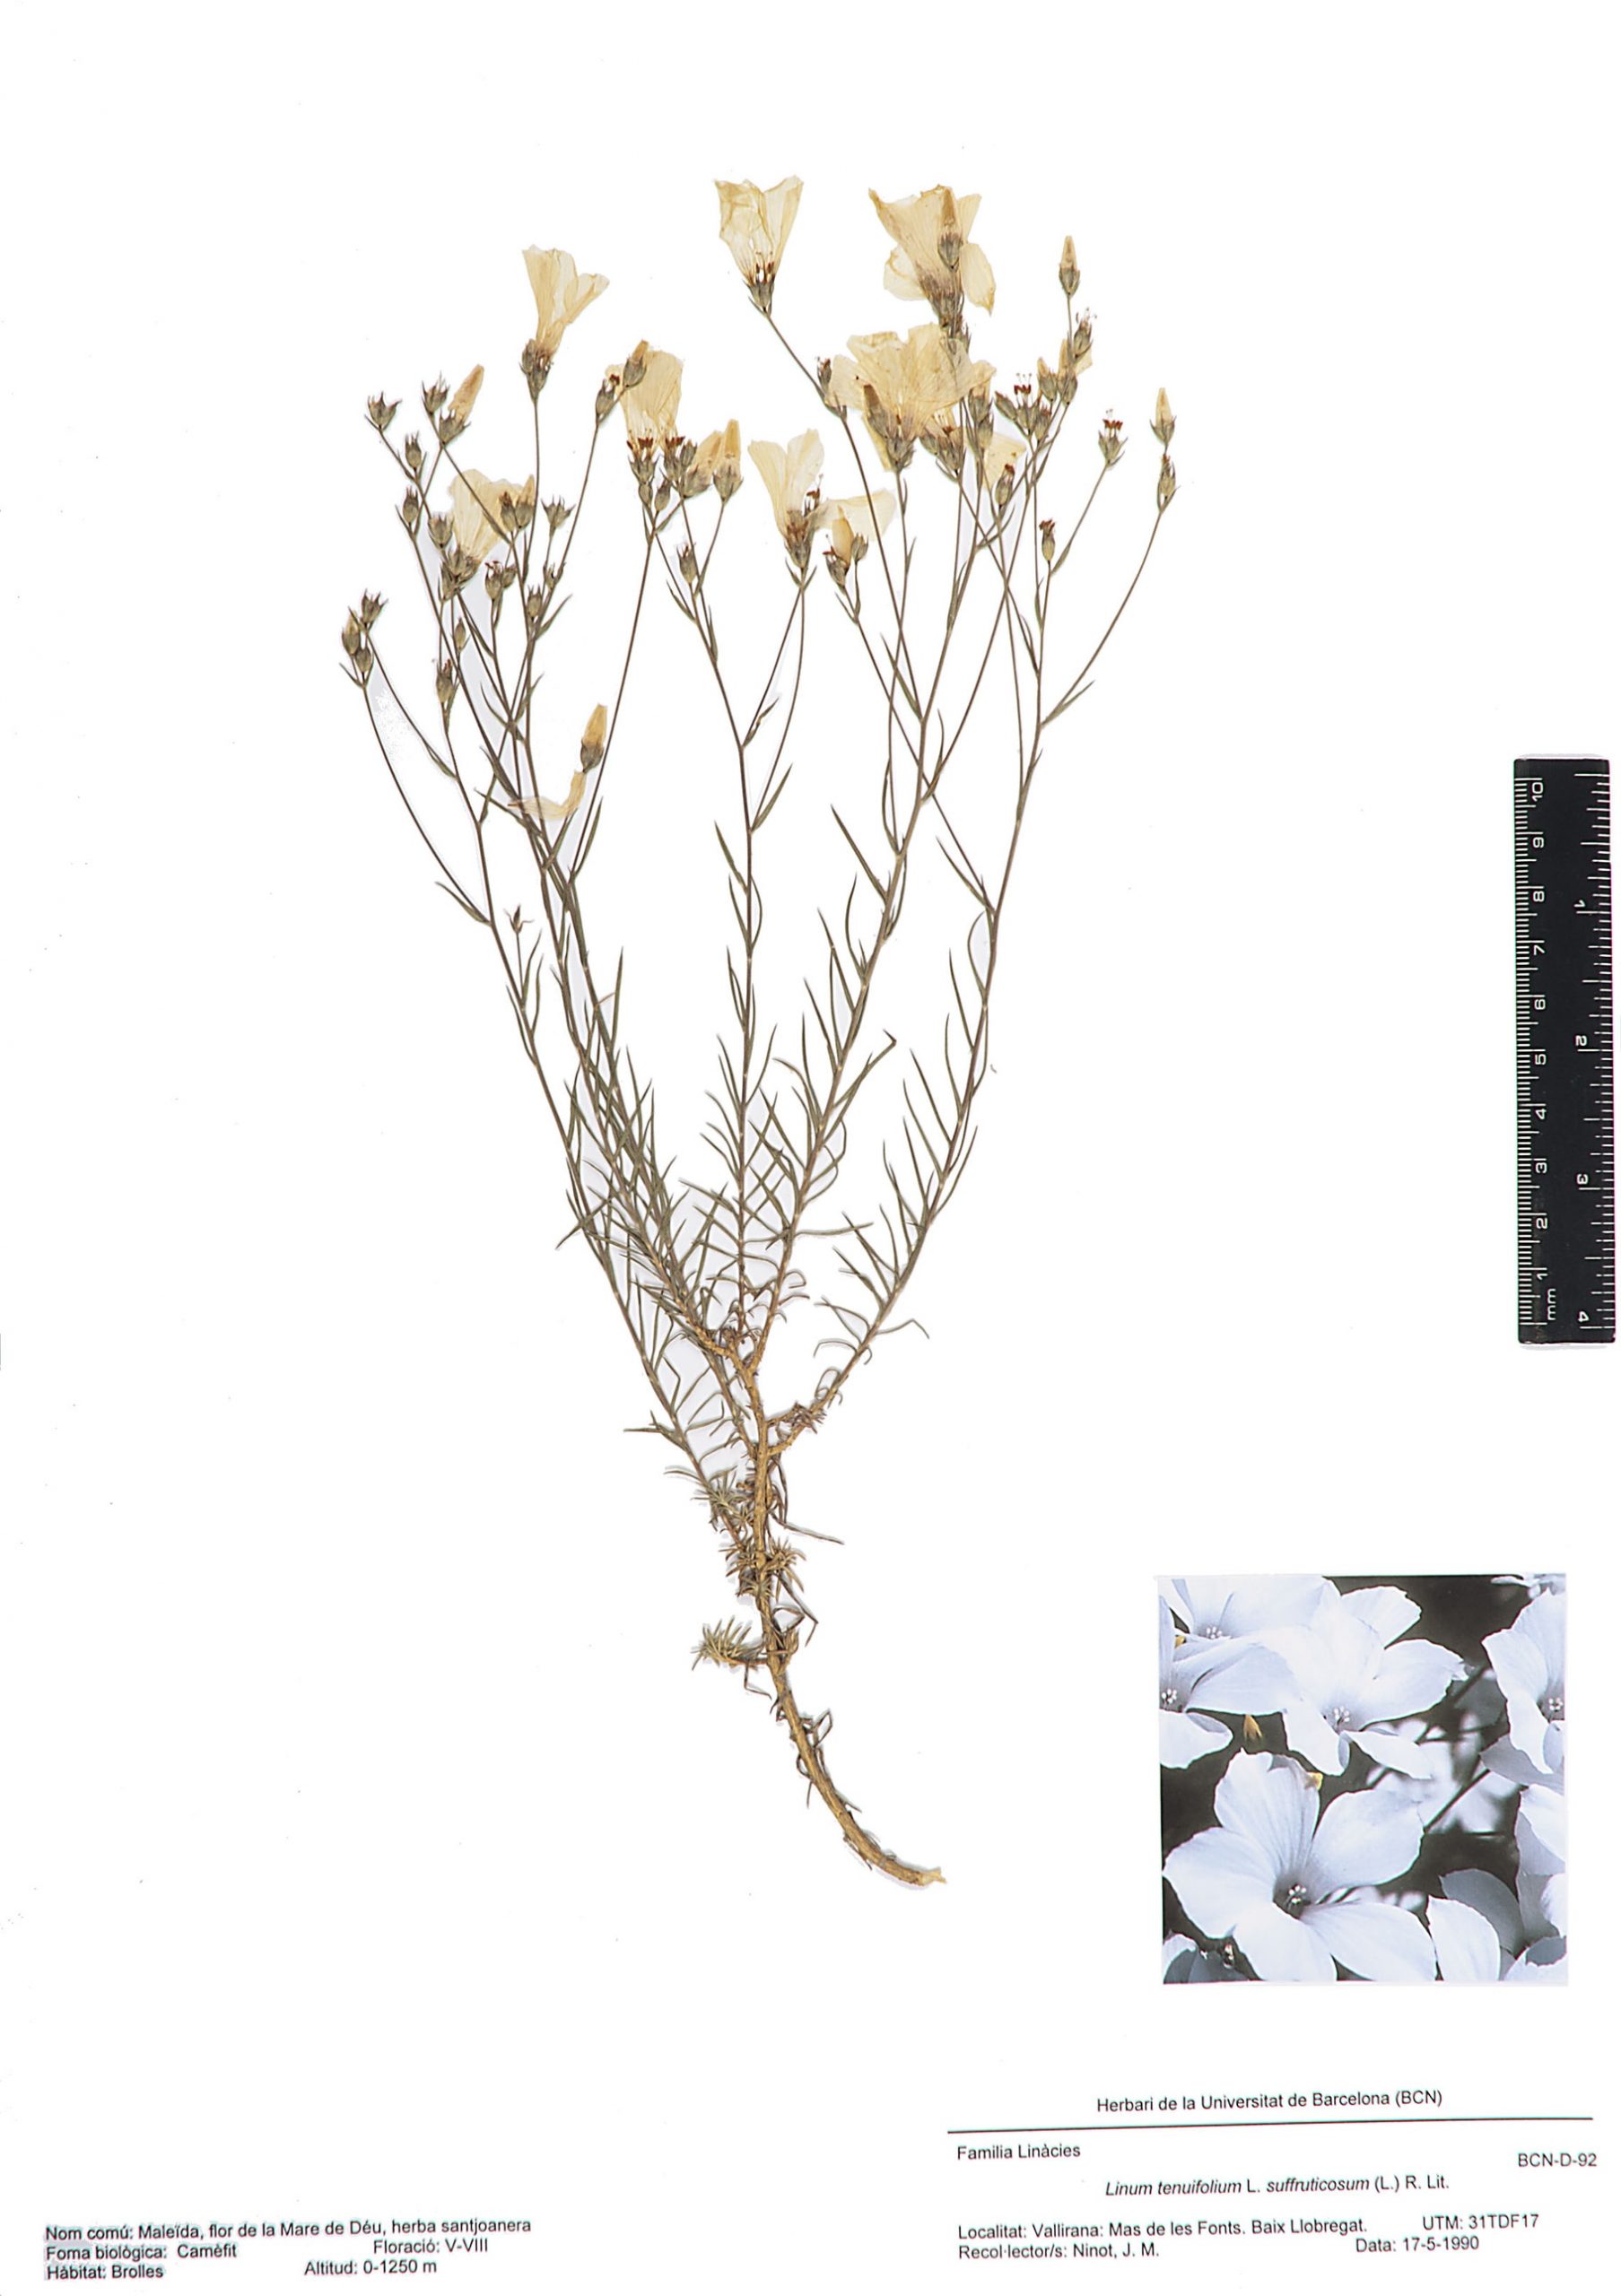 Linum tenuifolium L. subsp. suffruticosum (L.) Litard. (Maleïda, flor de la Mare de Déu, flor de Senyora, flor sense virtut, herba santjoanera, herba sense virtut)